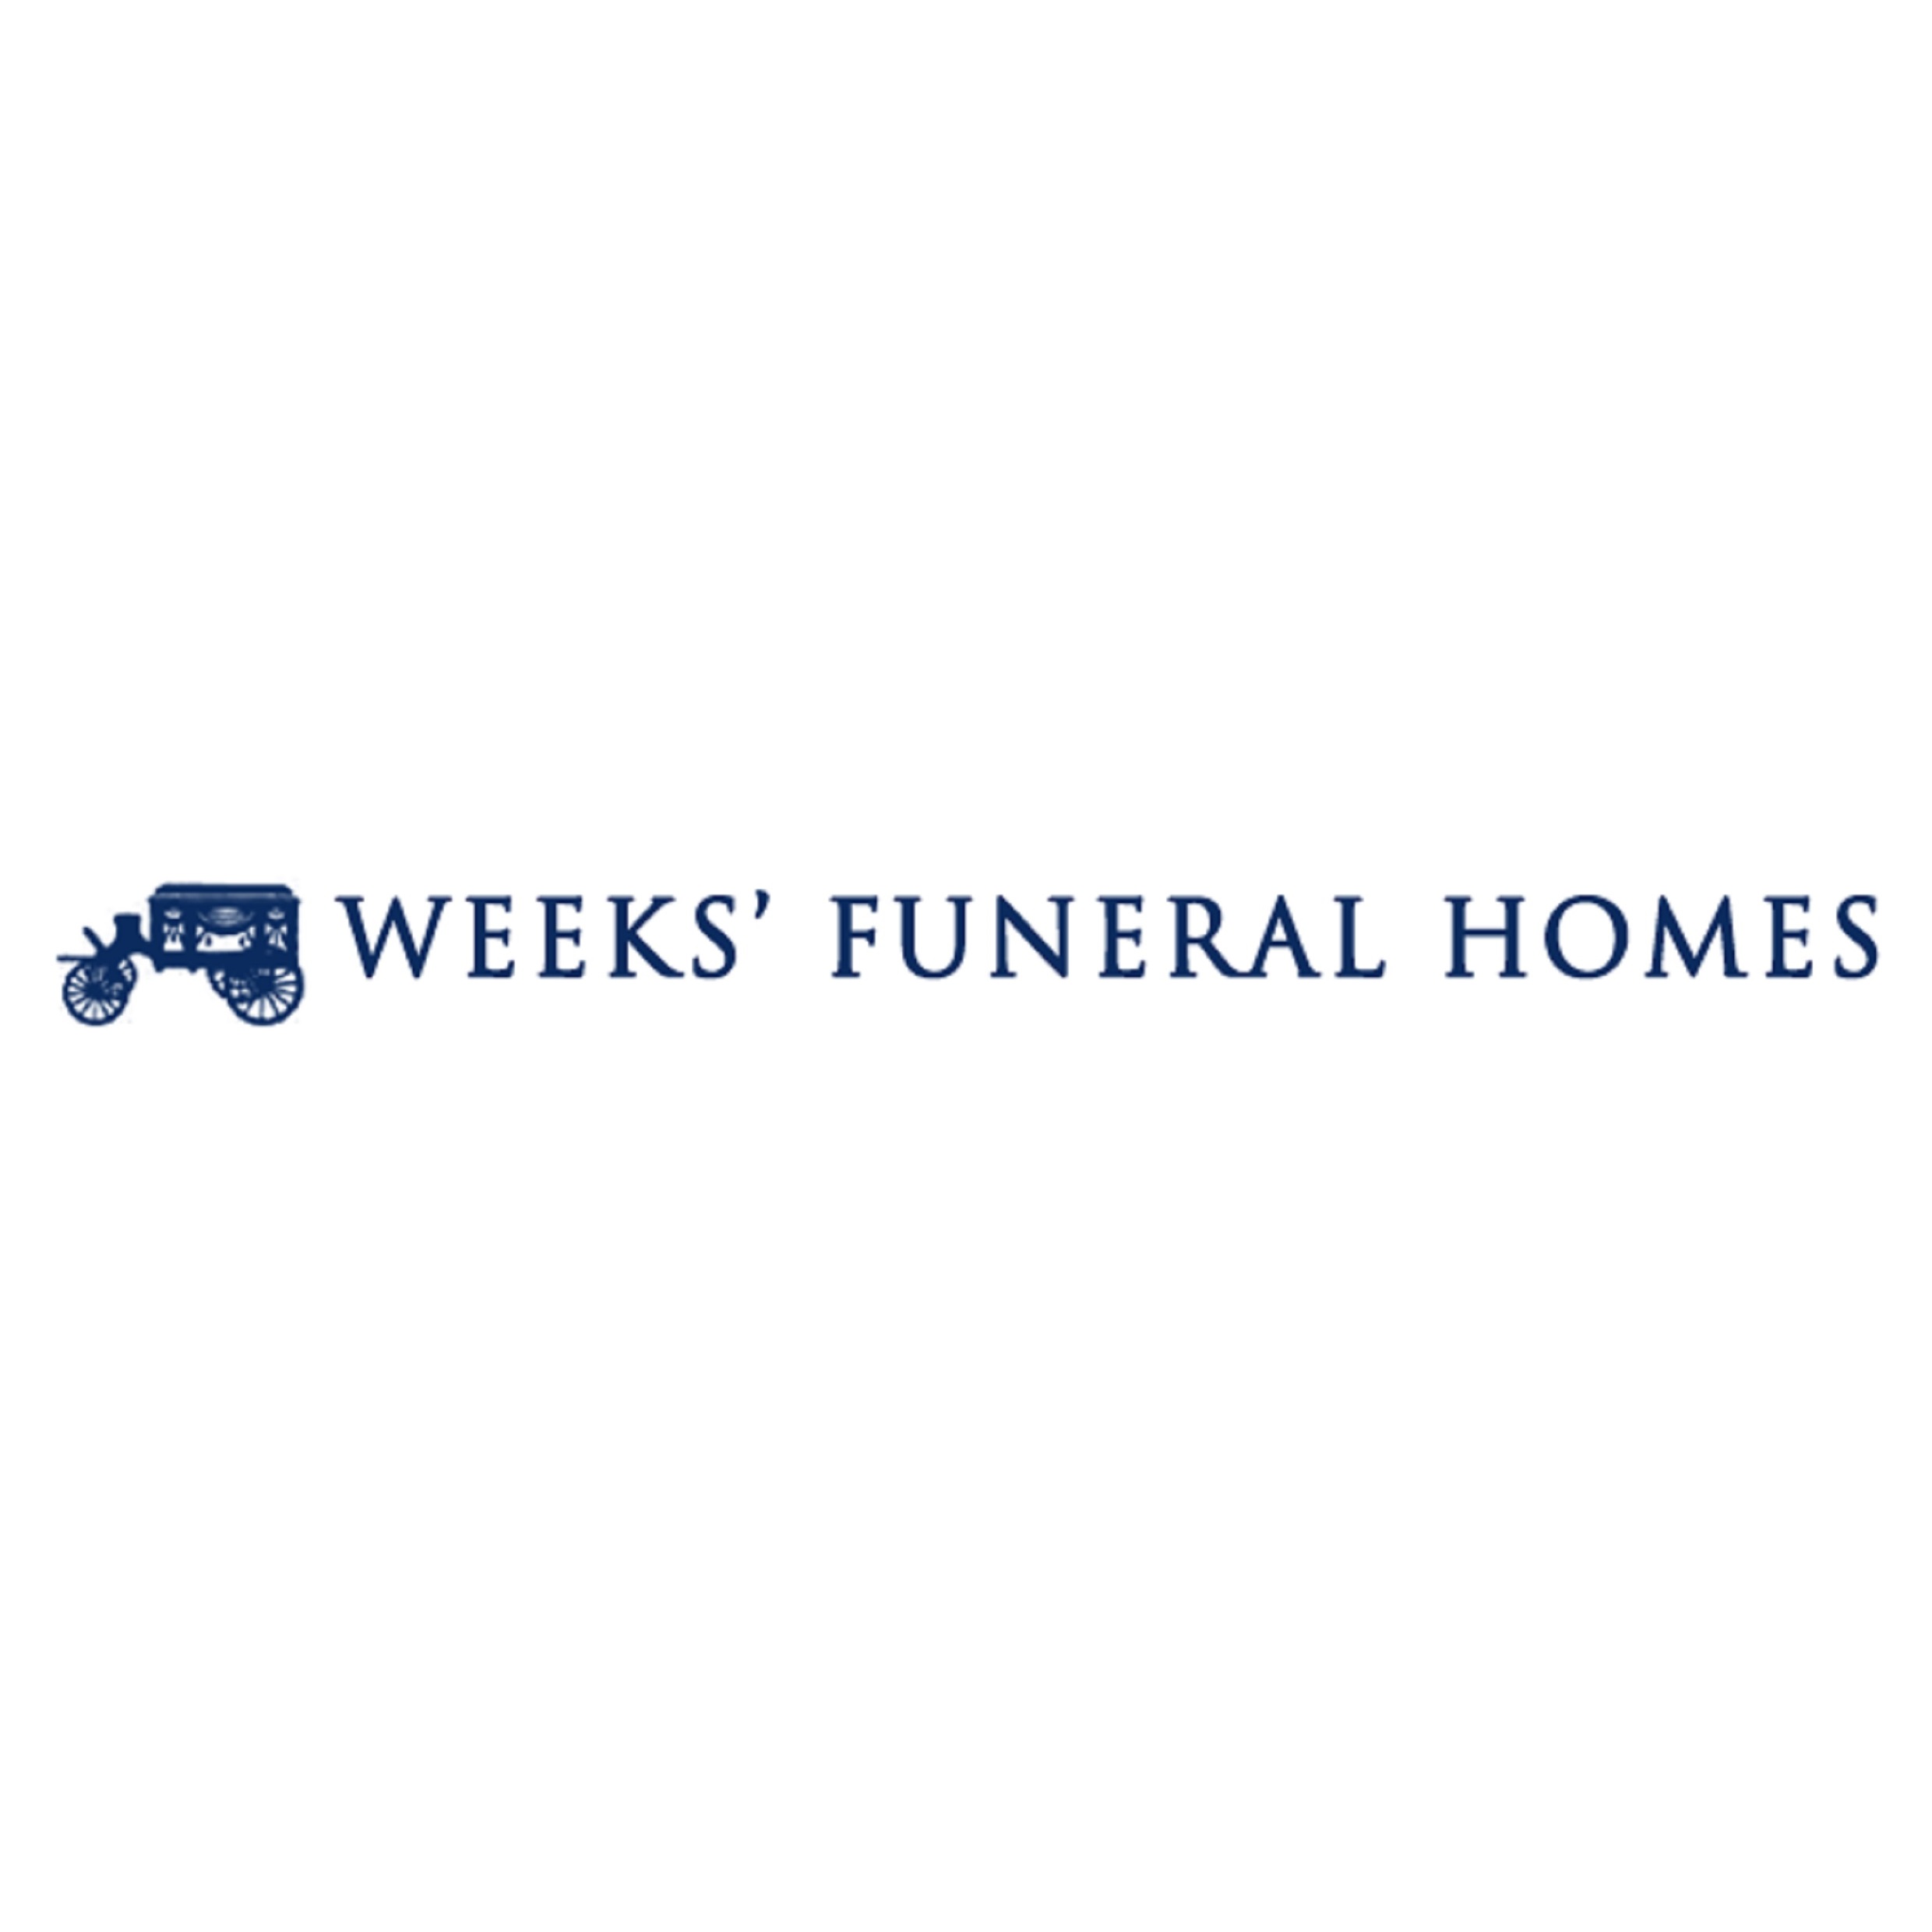 weeks’ funeral home | funeral directors in buckley